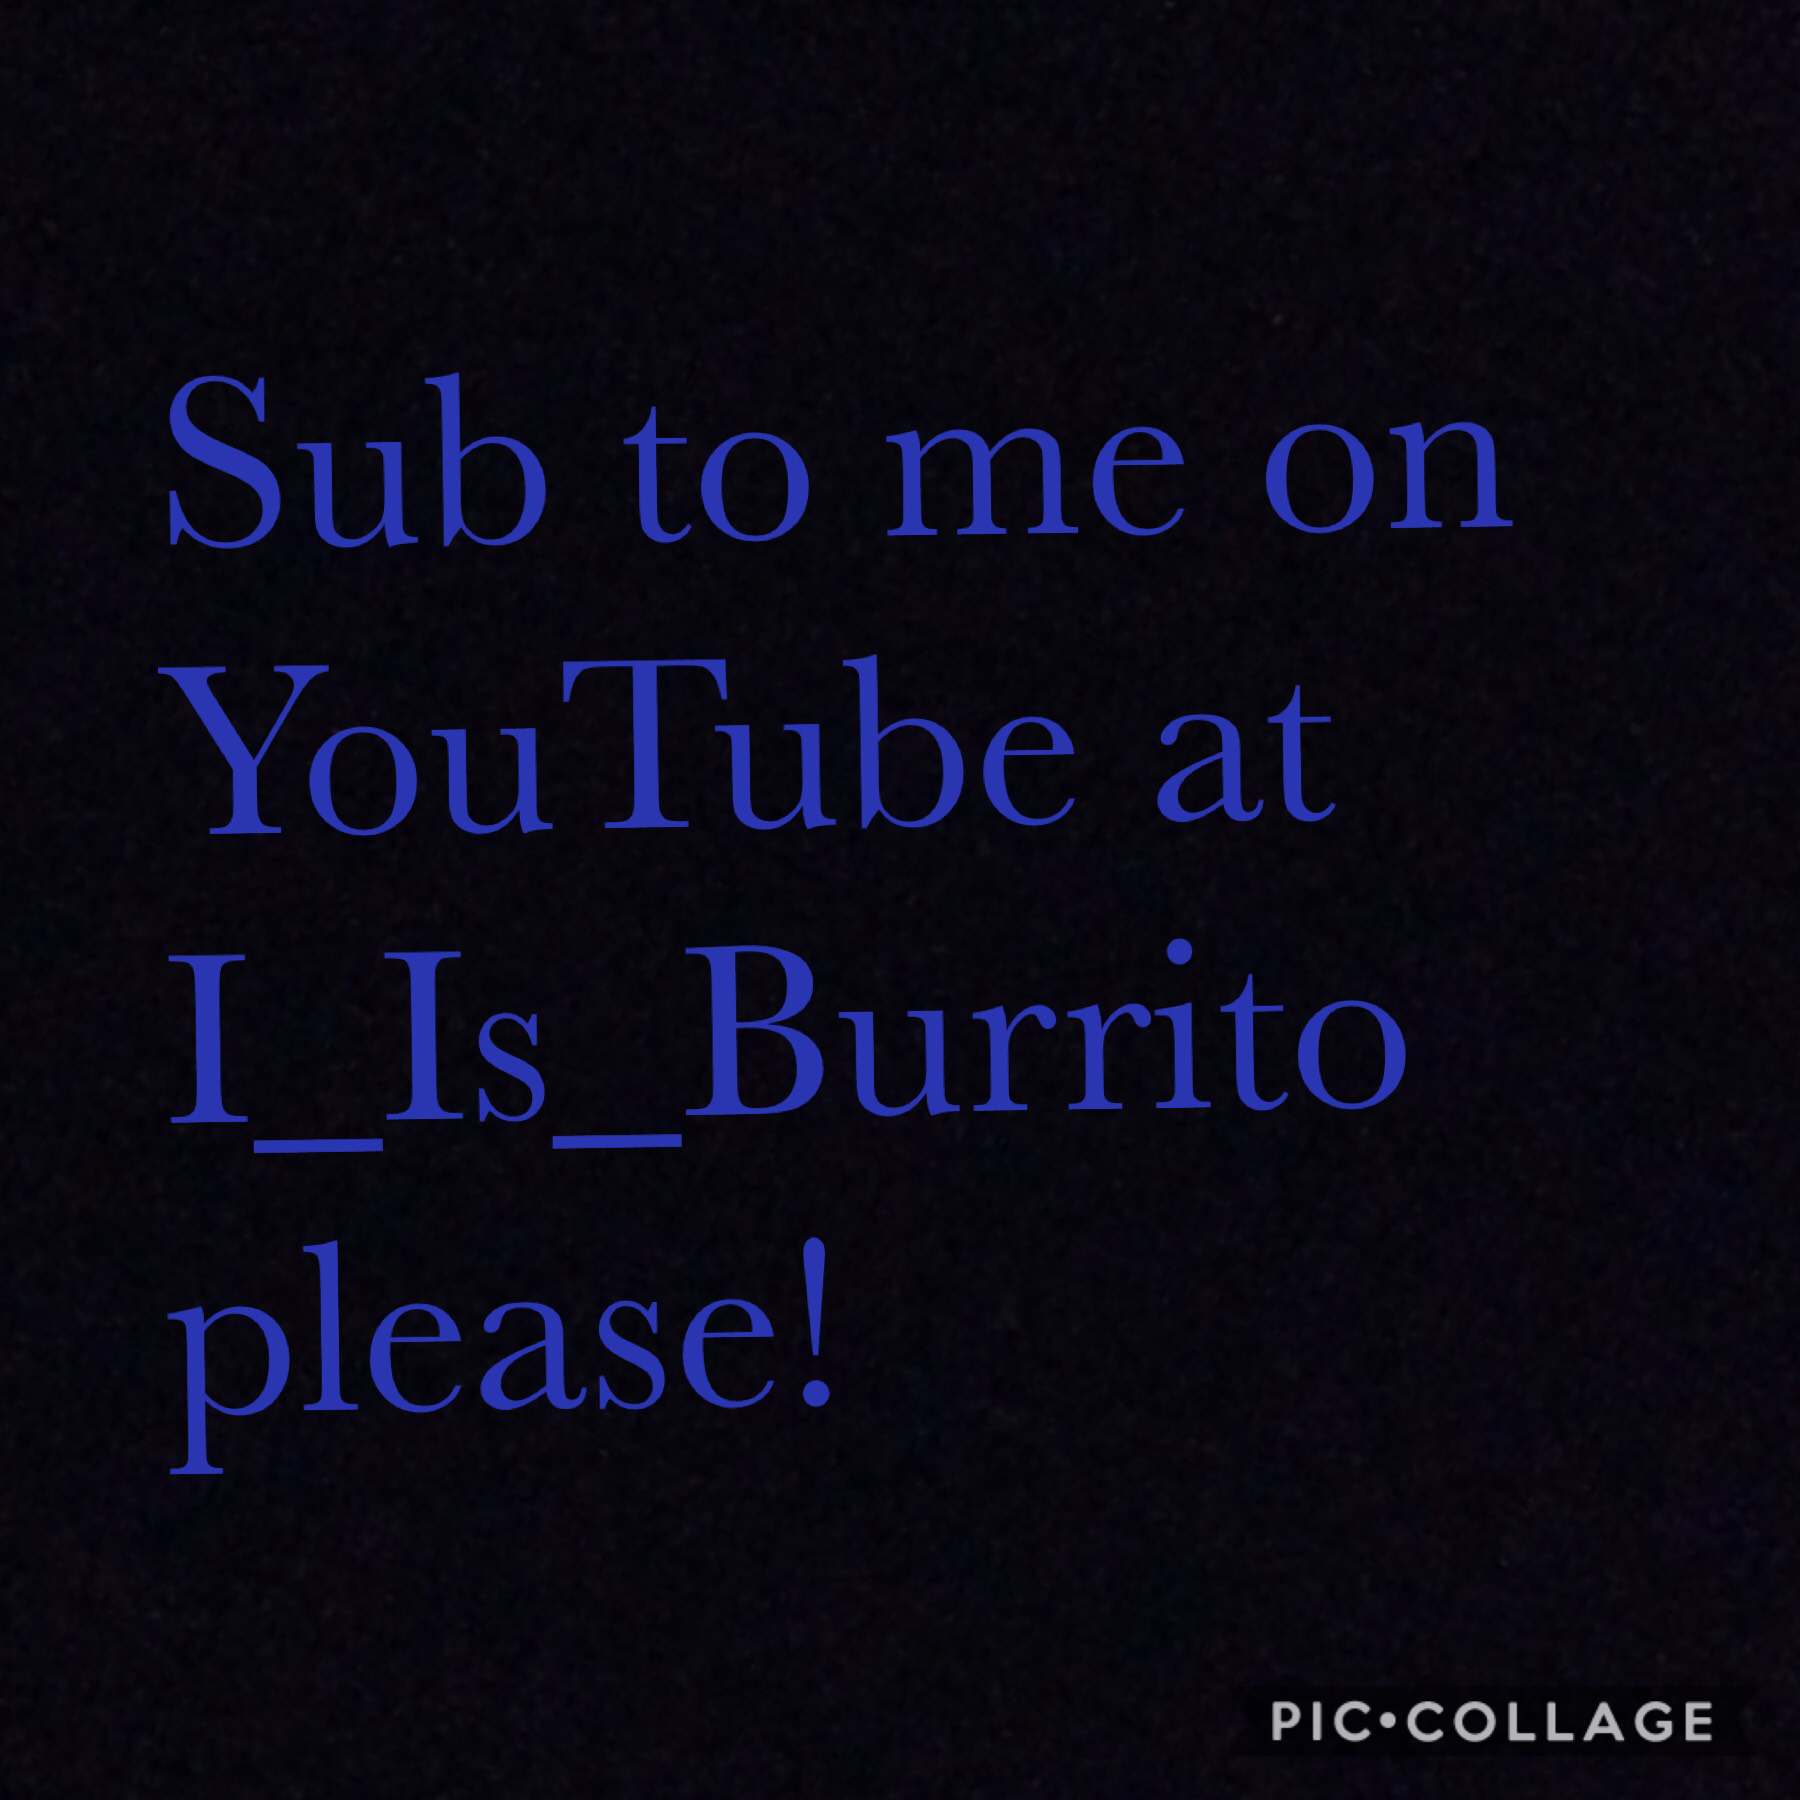 Please sub and like